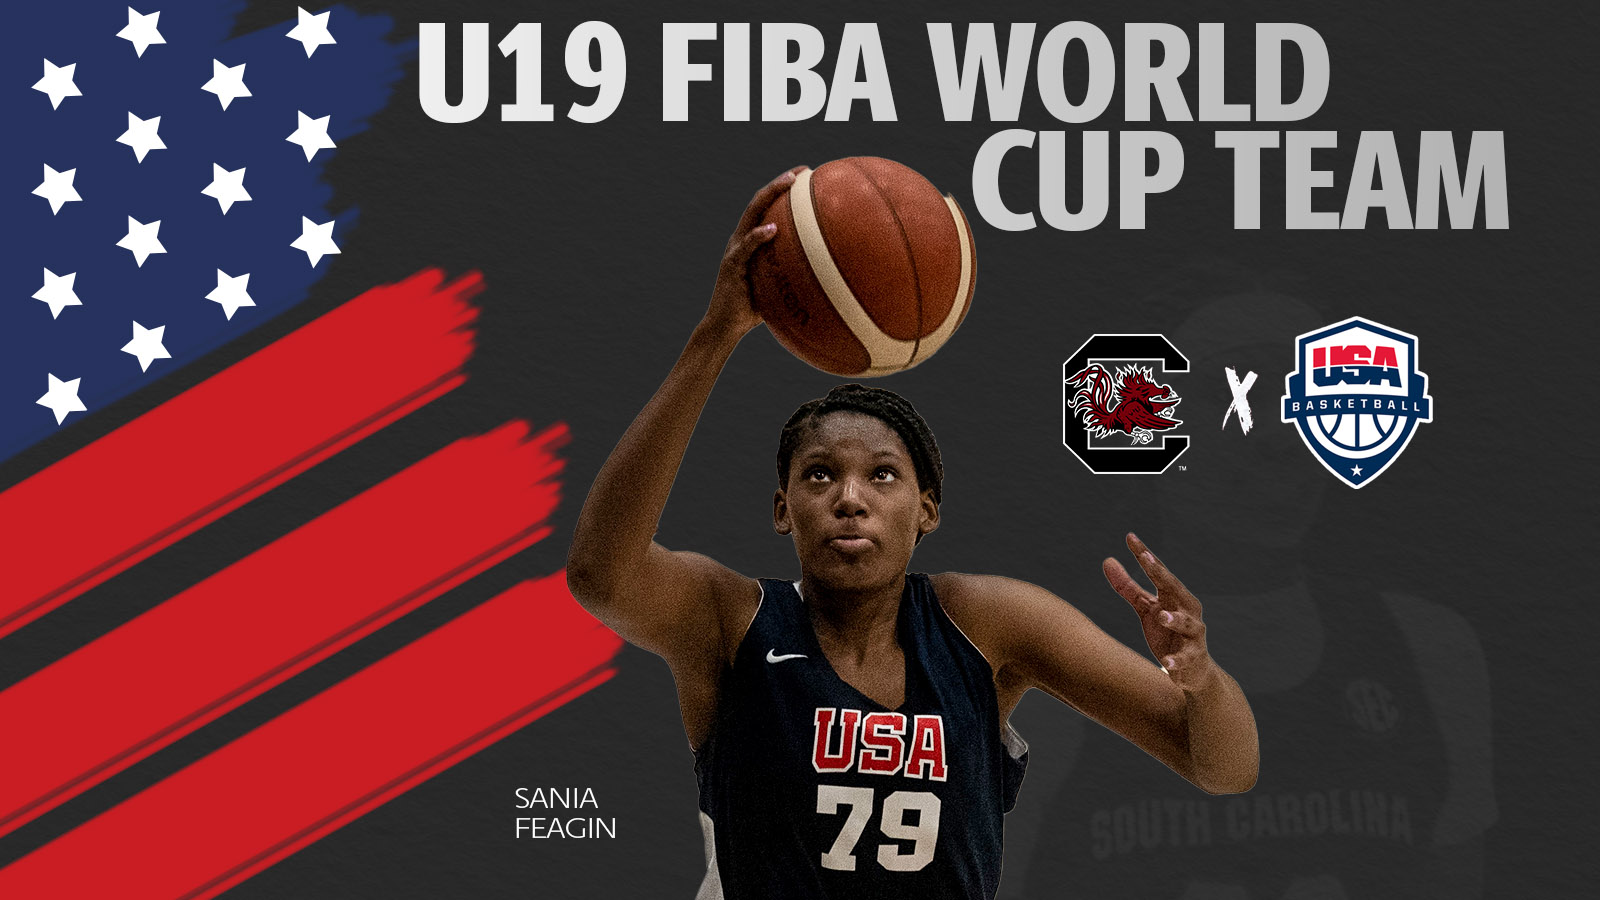 Feagin Named to USA FIBA U19 World Cup Team